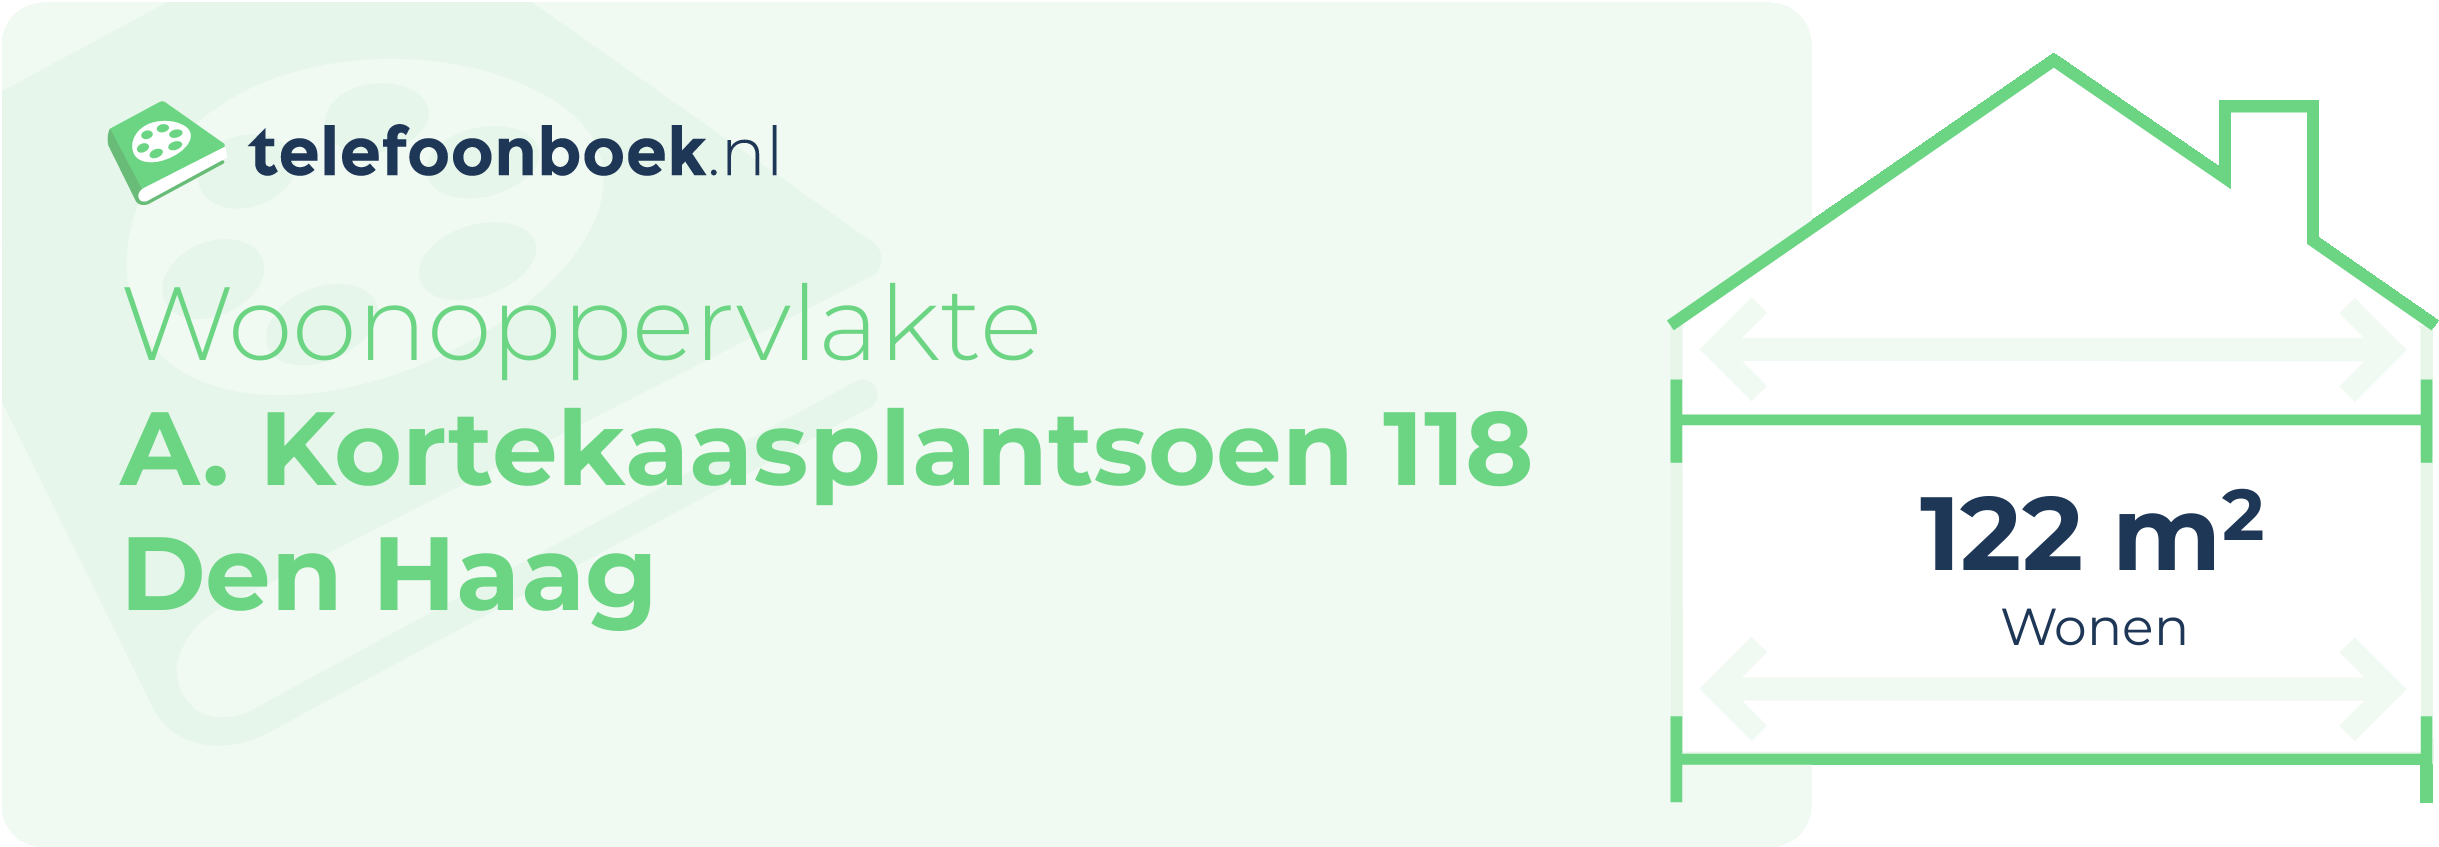 Woonoppervlakte A. Kortekaasplantsoen 118 Den Haag